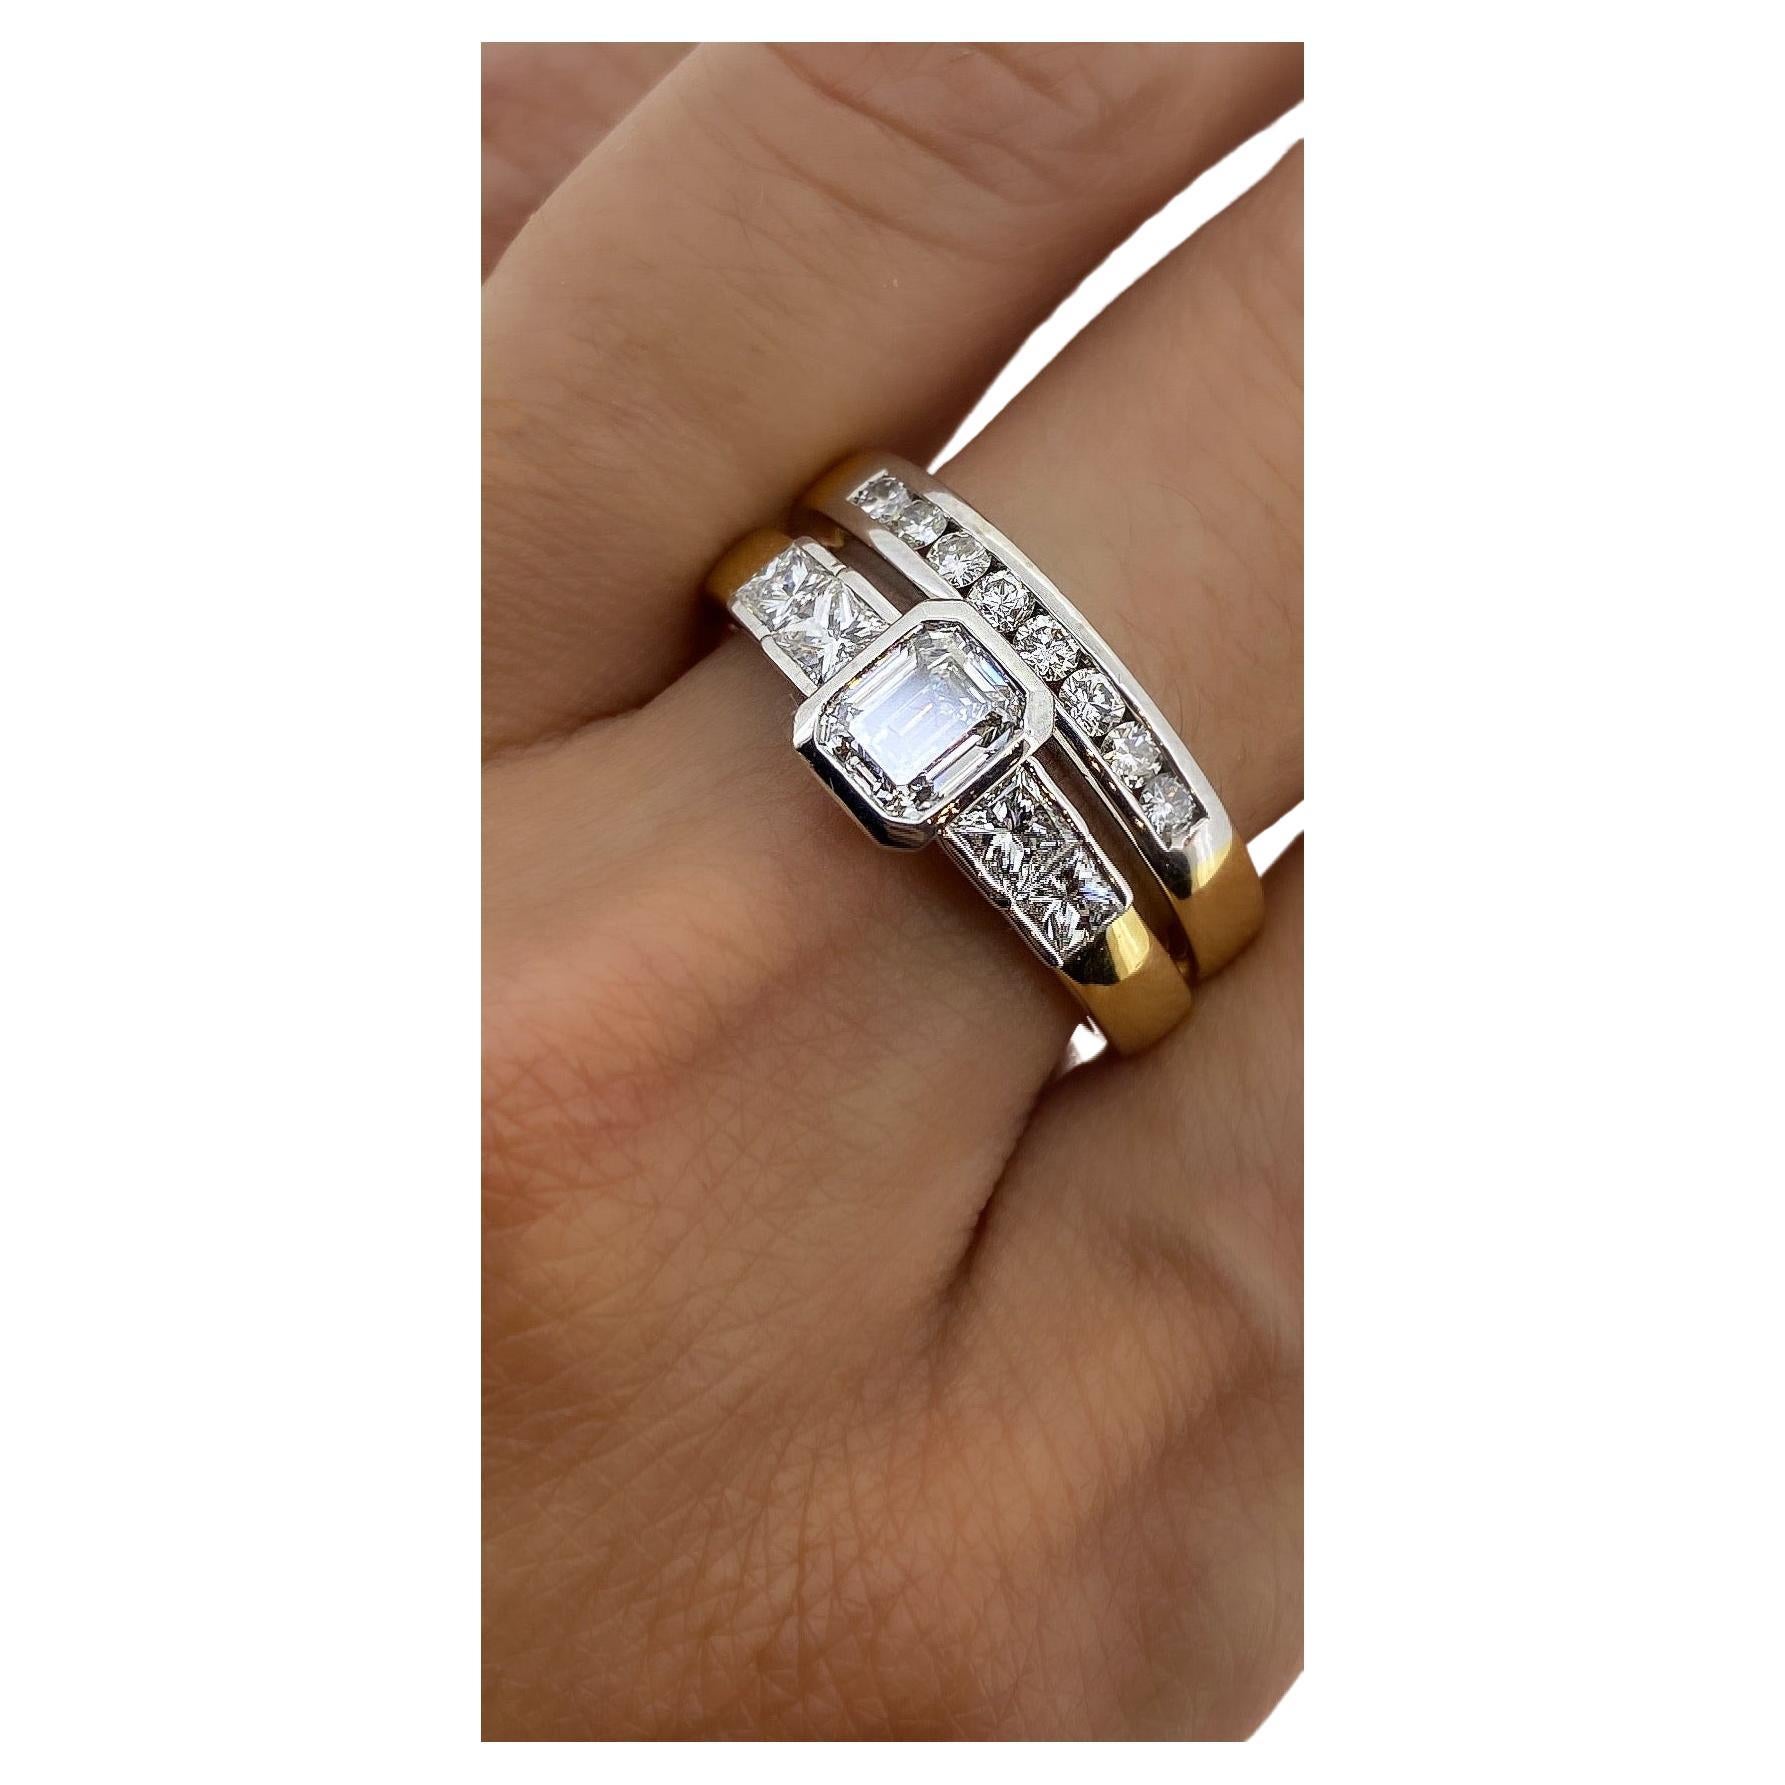 Two-Tone 18K Gold Wedding Set: 1.00ct Emerald Cut Diamond Ring & Diamond Band